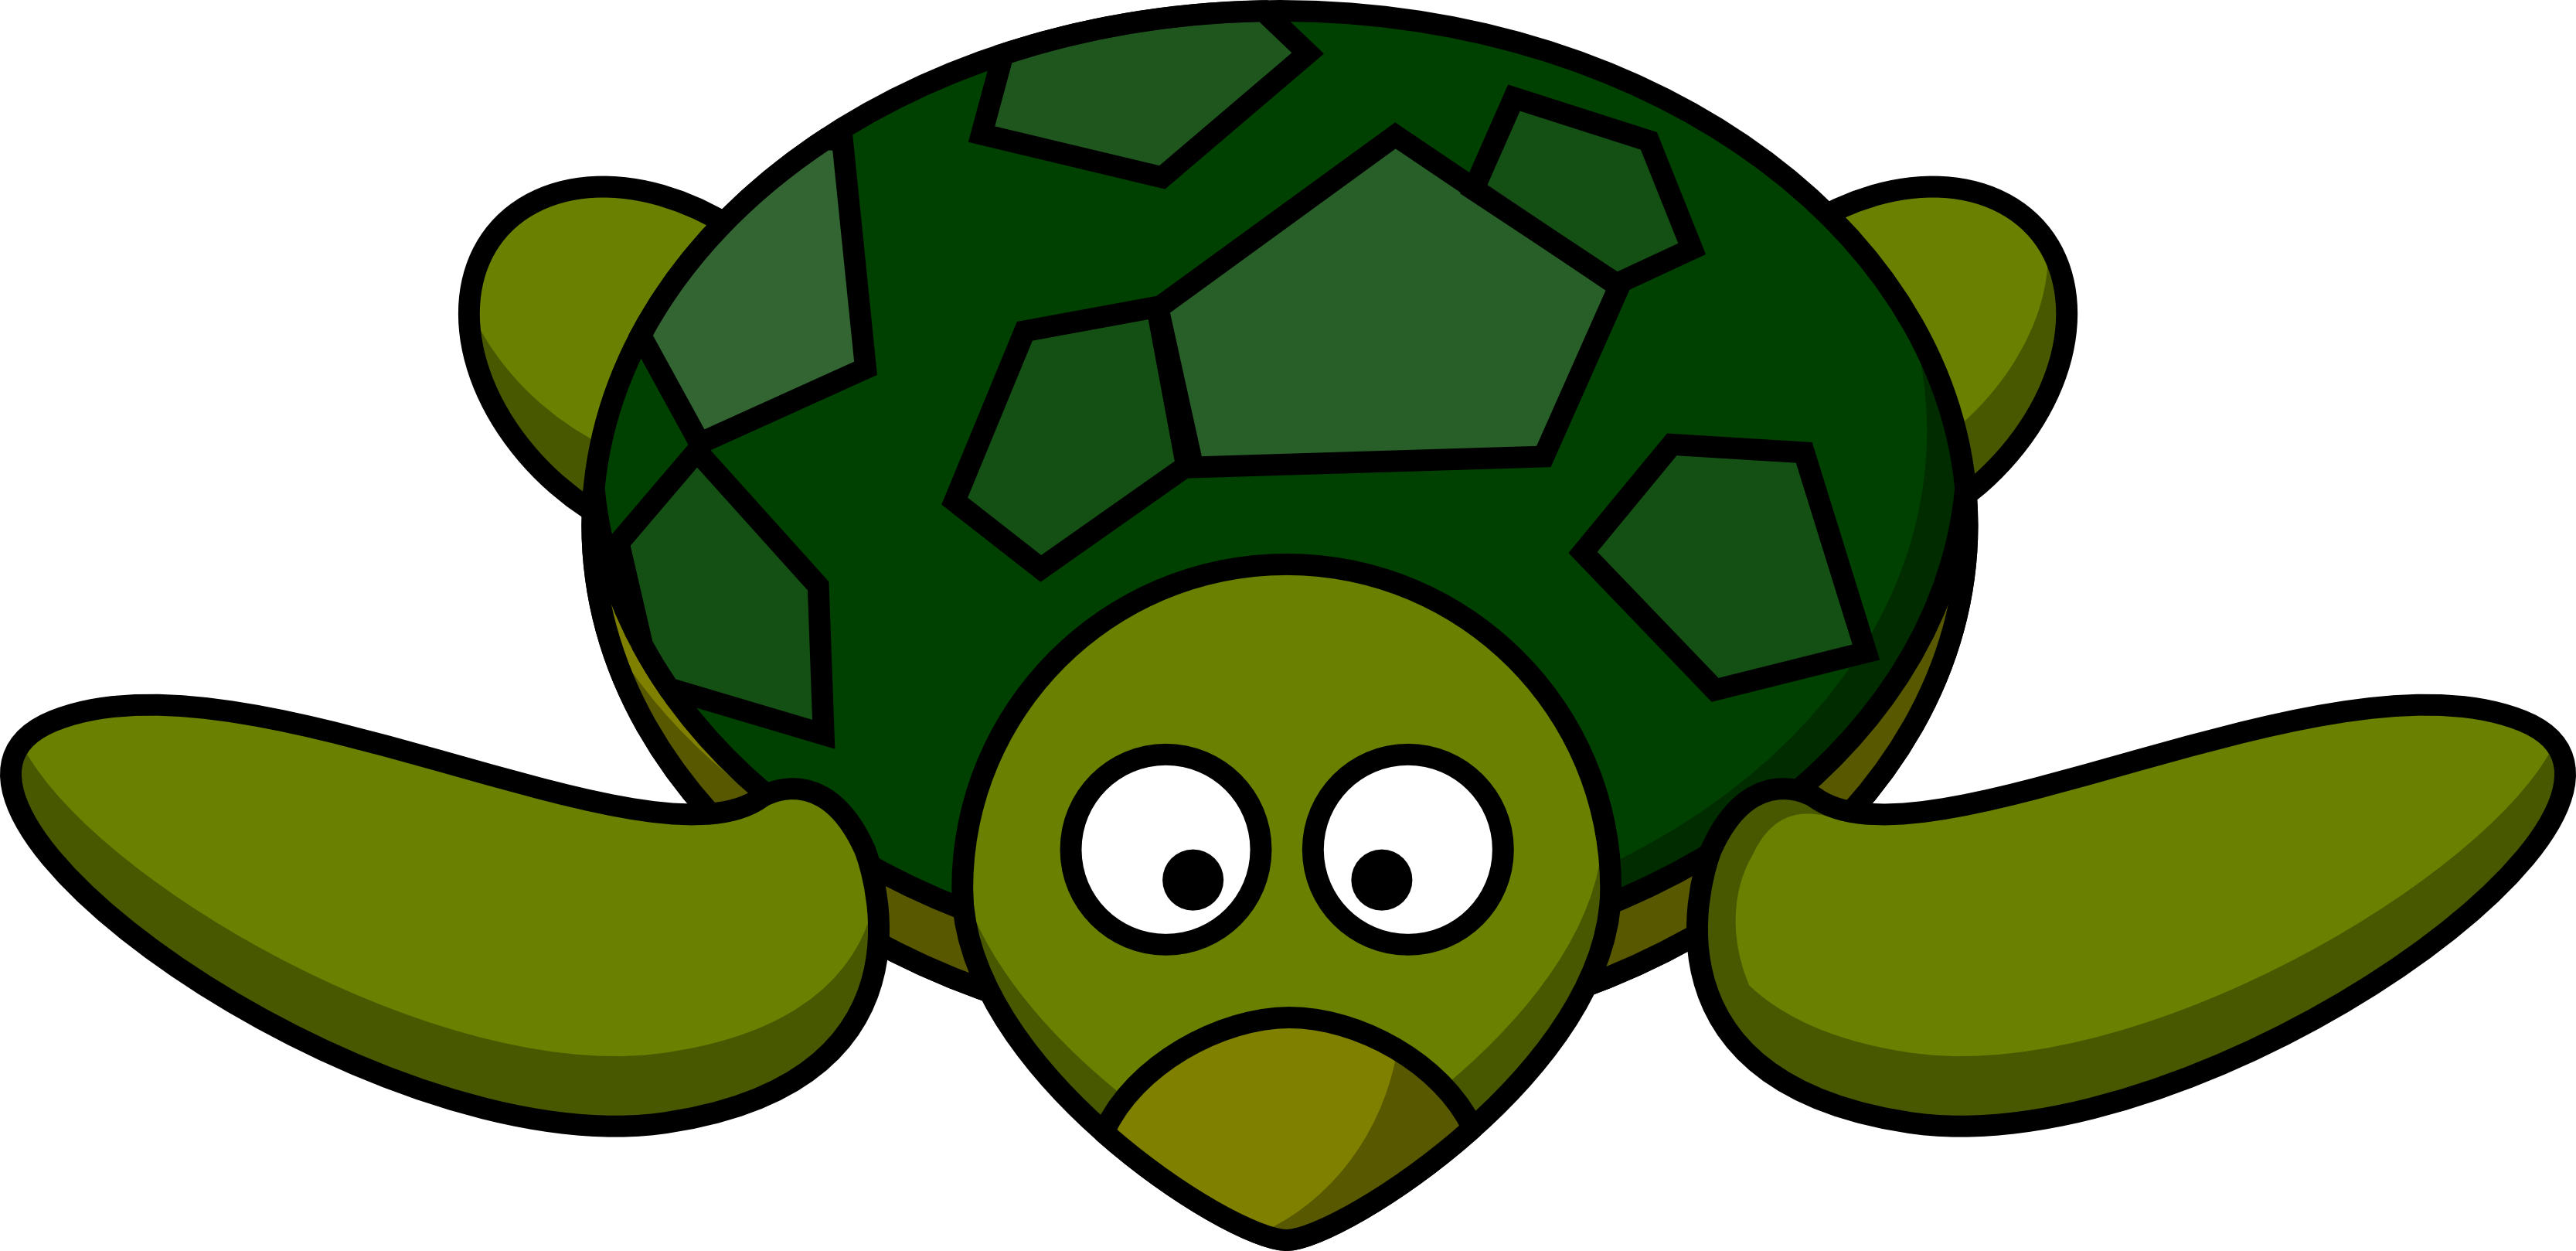 turtle clip art free download - photo #29